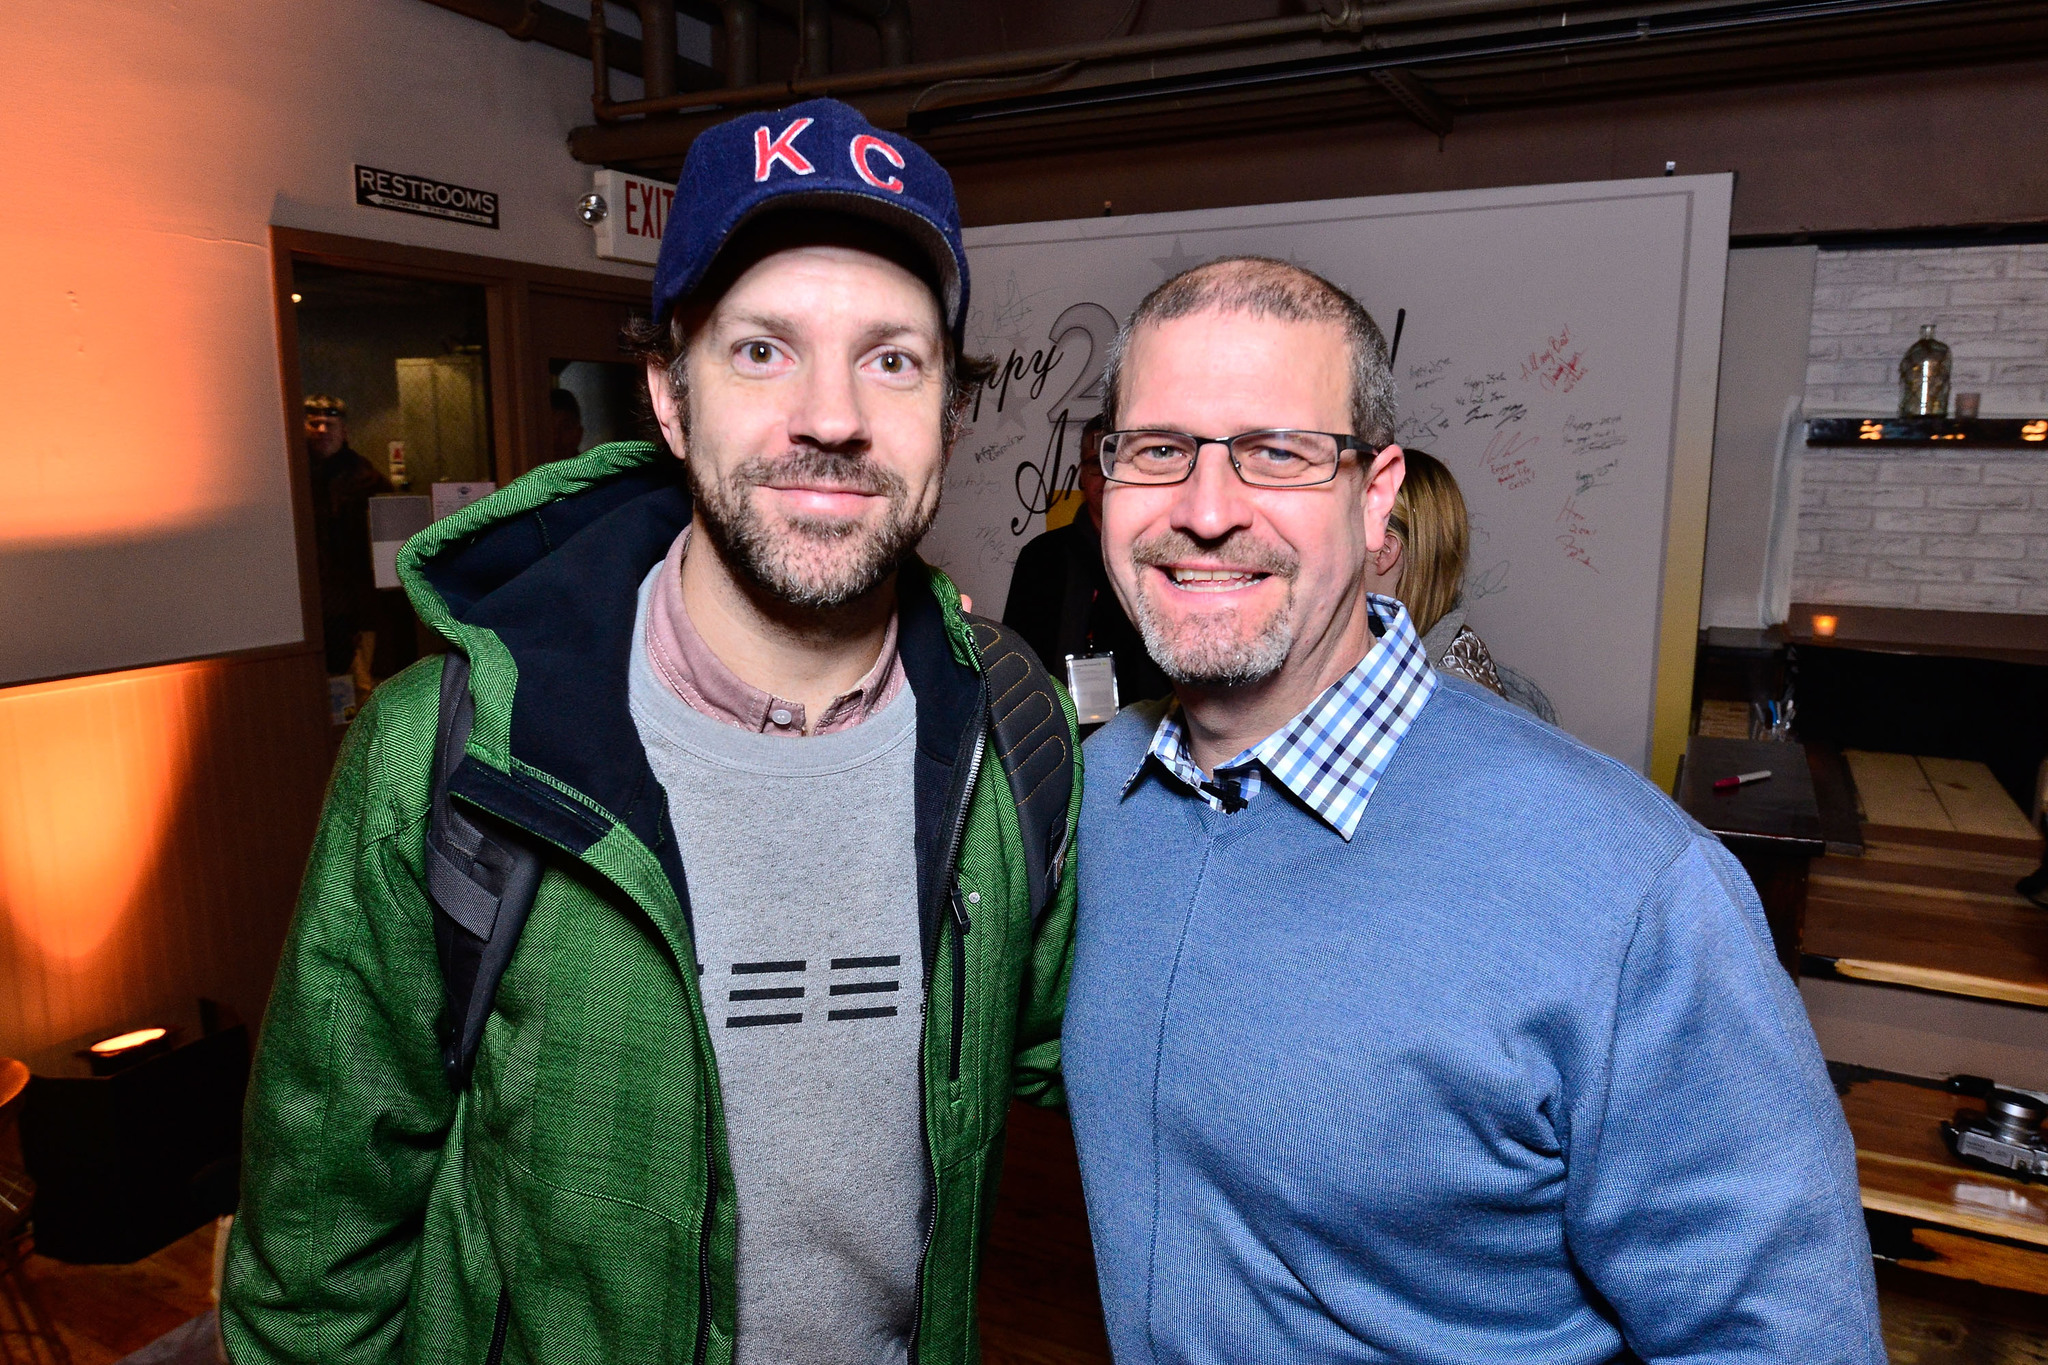 Jason Sudeikis and Keith Simanton at event of IMDb & AIV Studio at Sundance (2015)